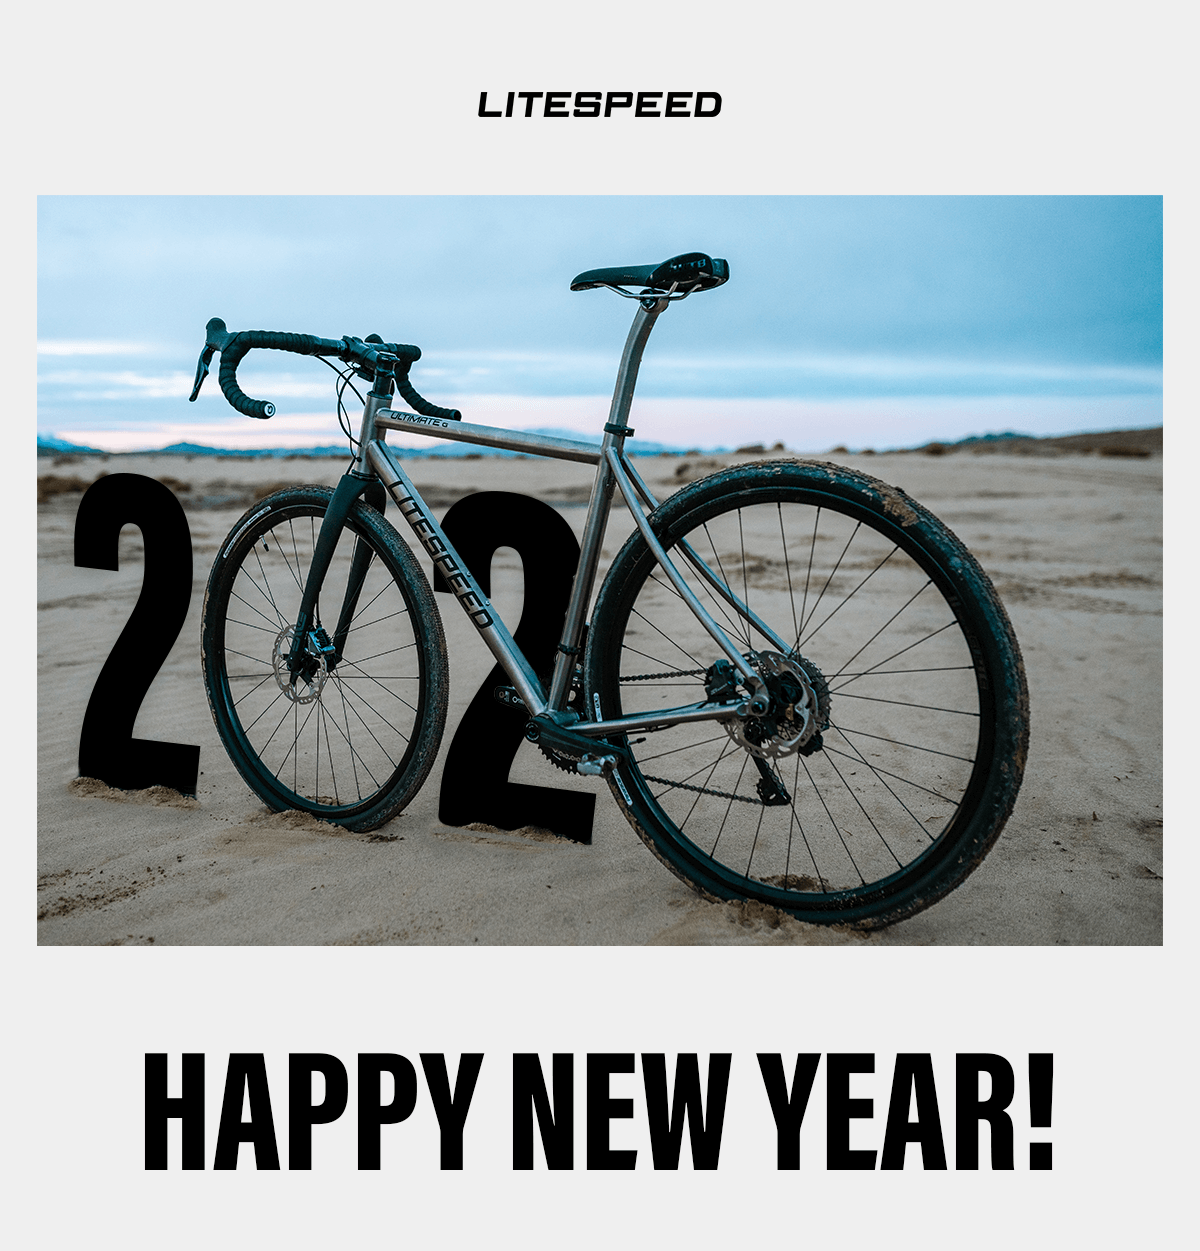 Happy New Year from Litespeed!